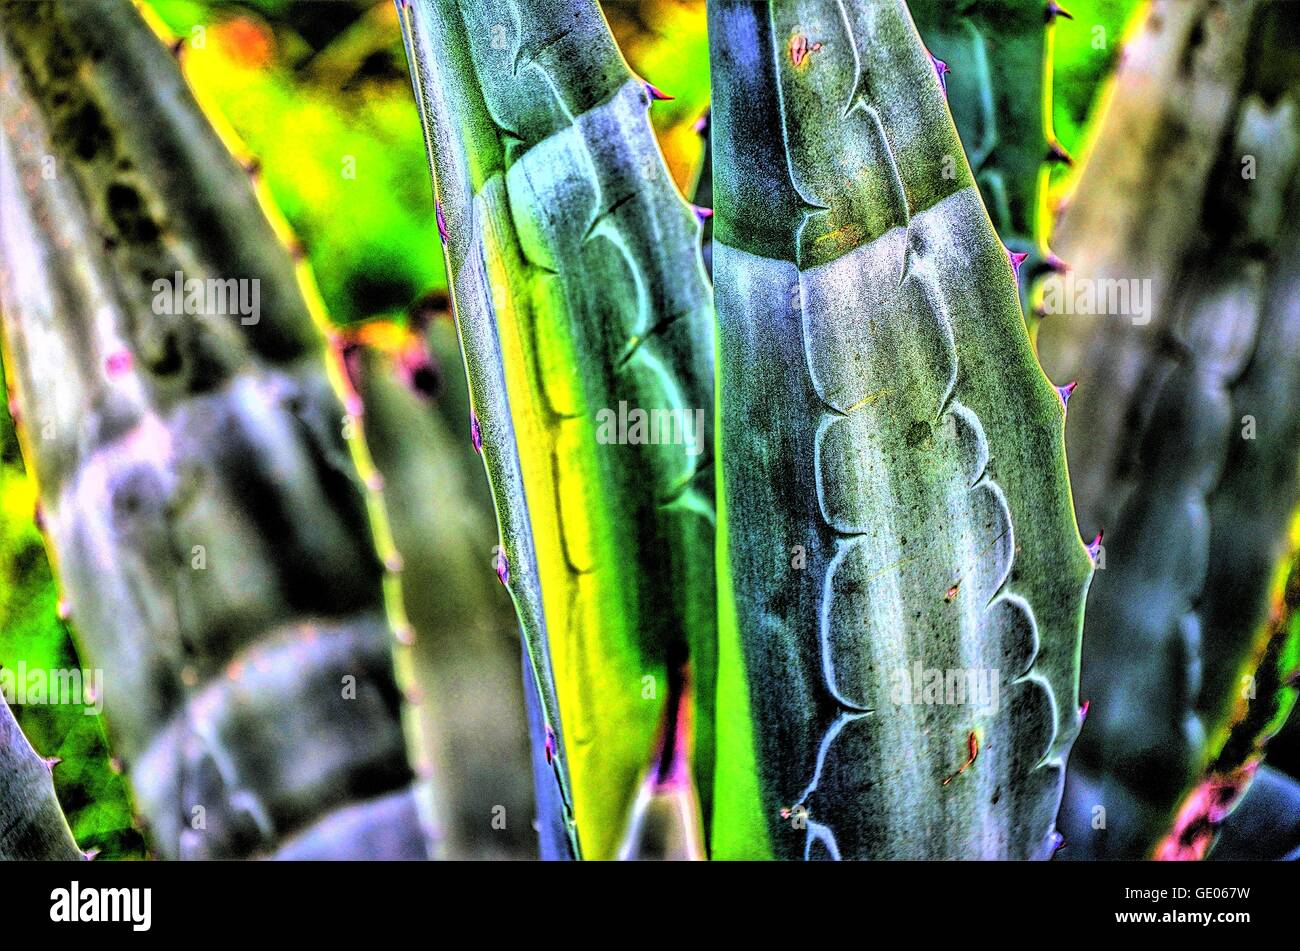 bunt, Agave, Kaktus, Pflanze, grün, gelb, schwarz, grün, grau, blau, Violett, Sukkulenten, Kakteen, Bildbearbeitung Stockfoto